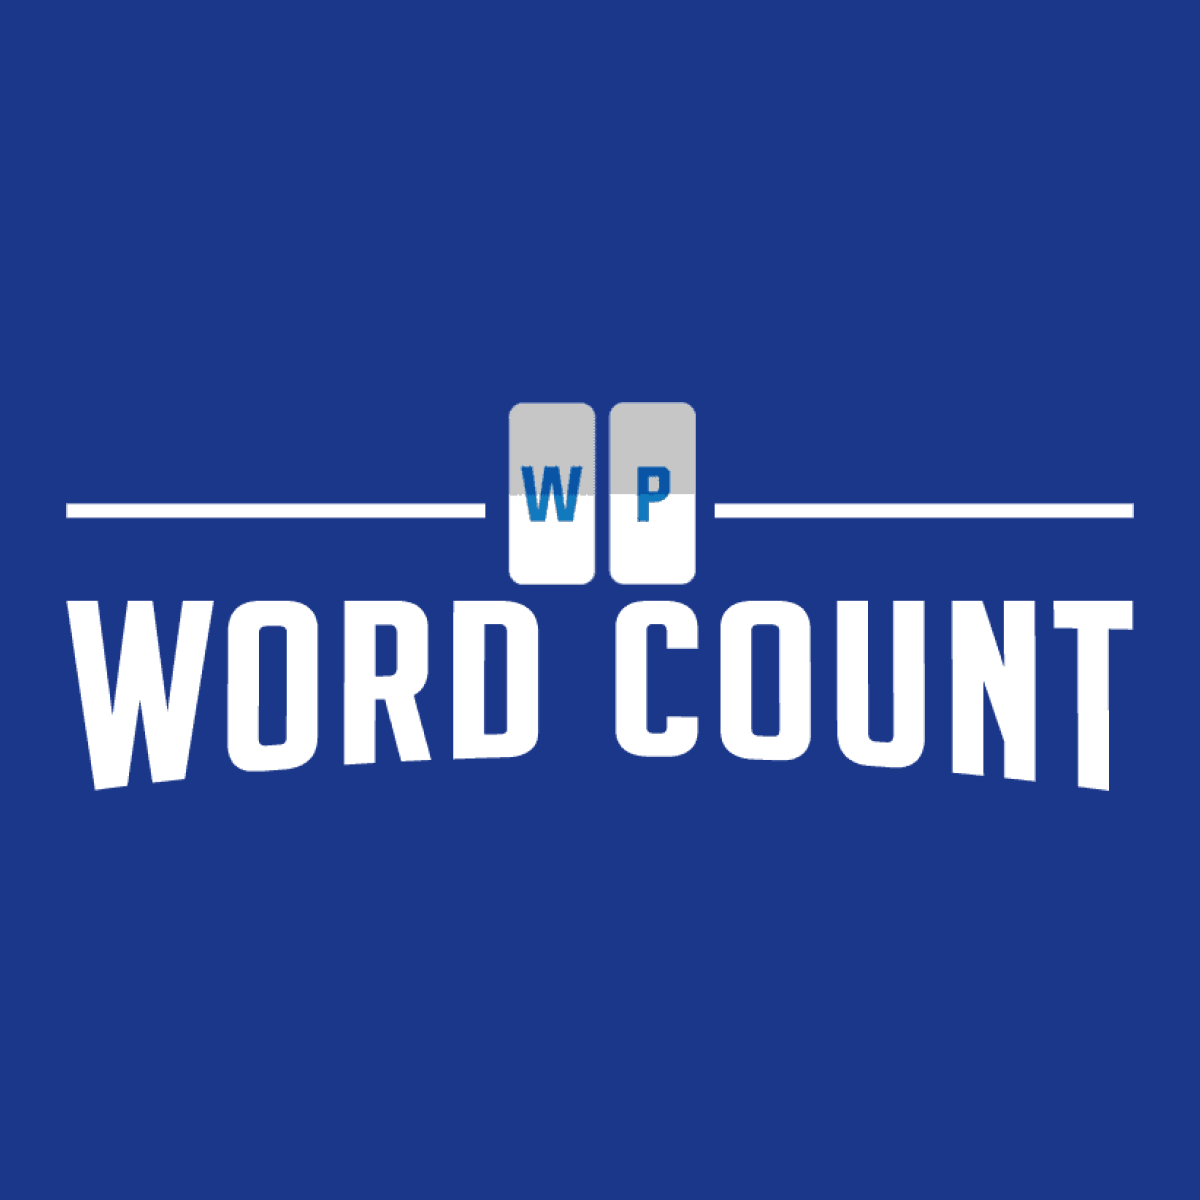 WP Word Count logo tile